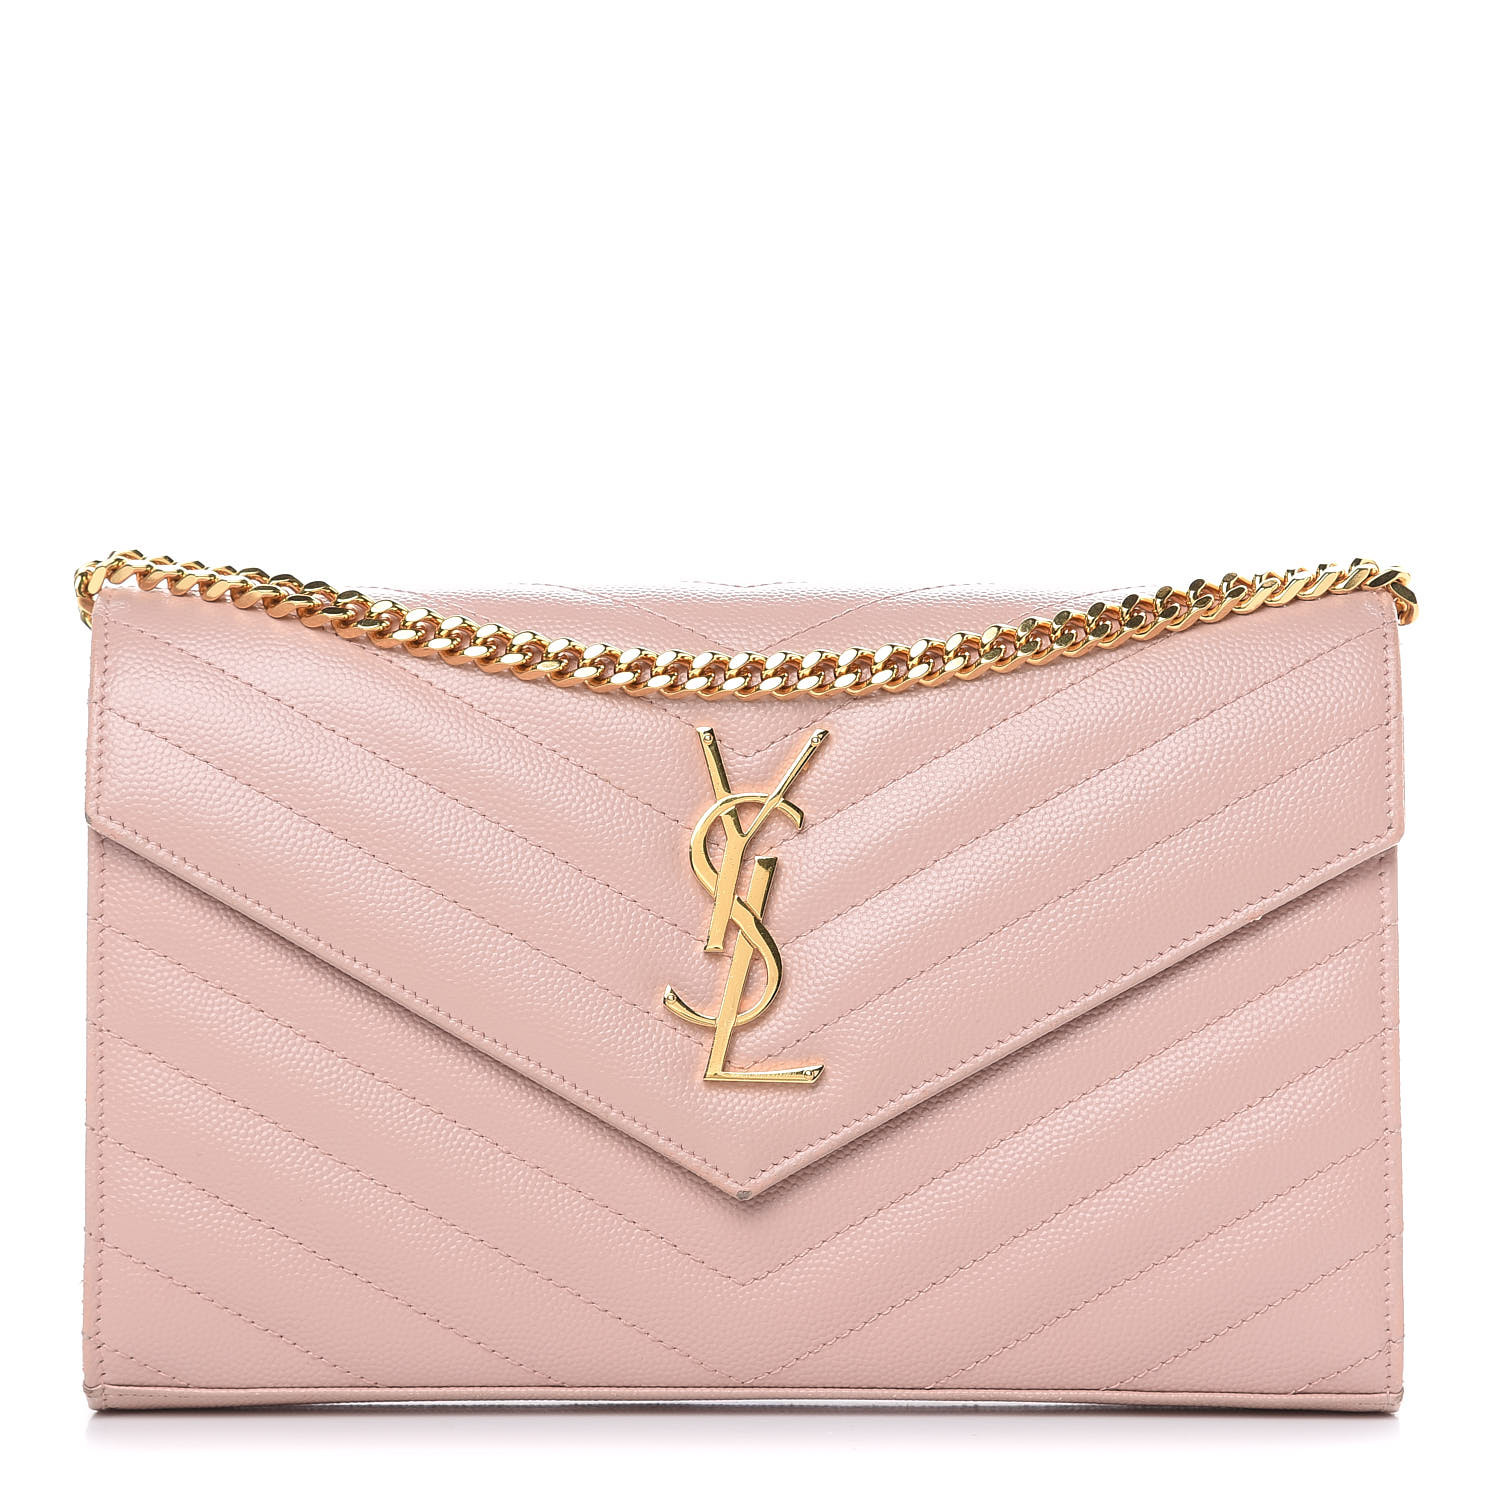 ysl chain wallet pink